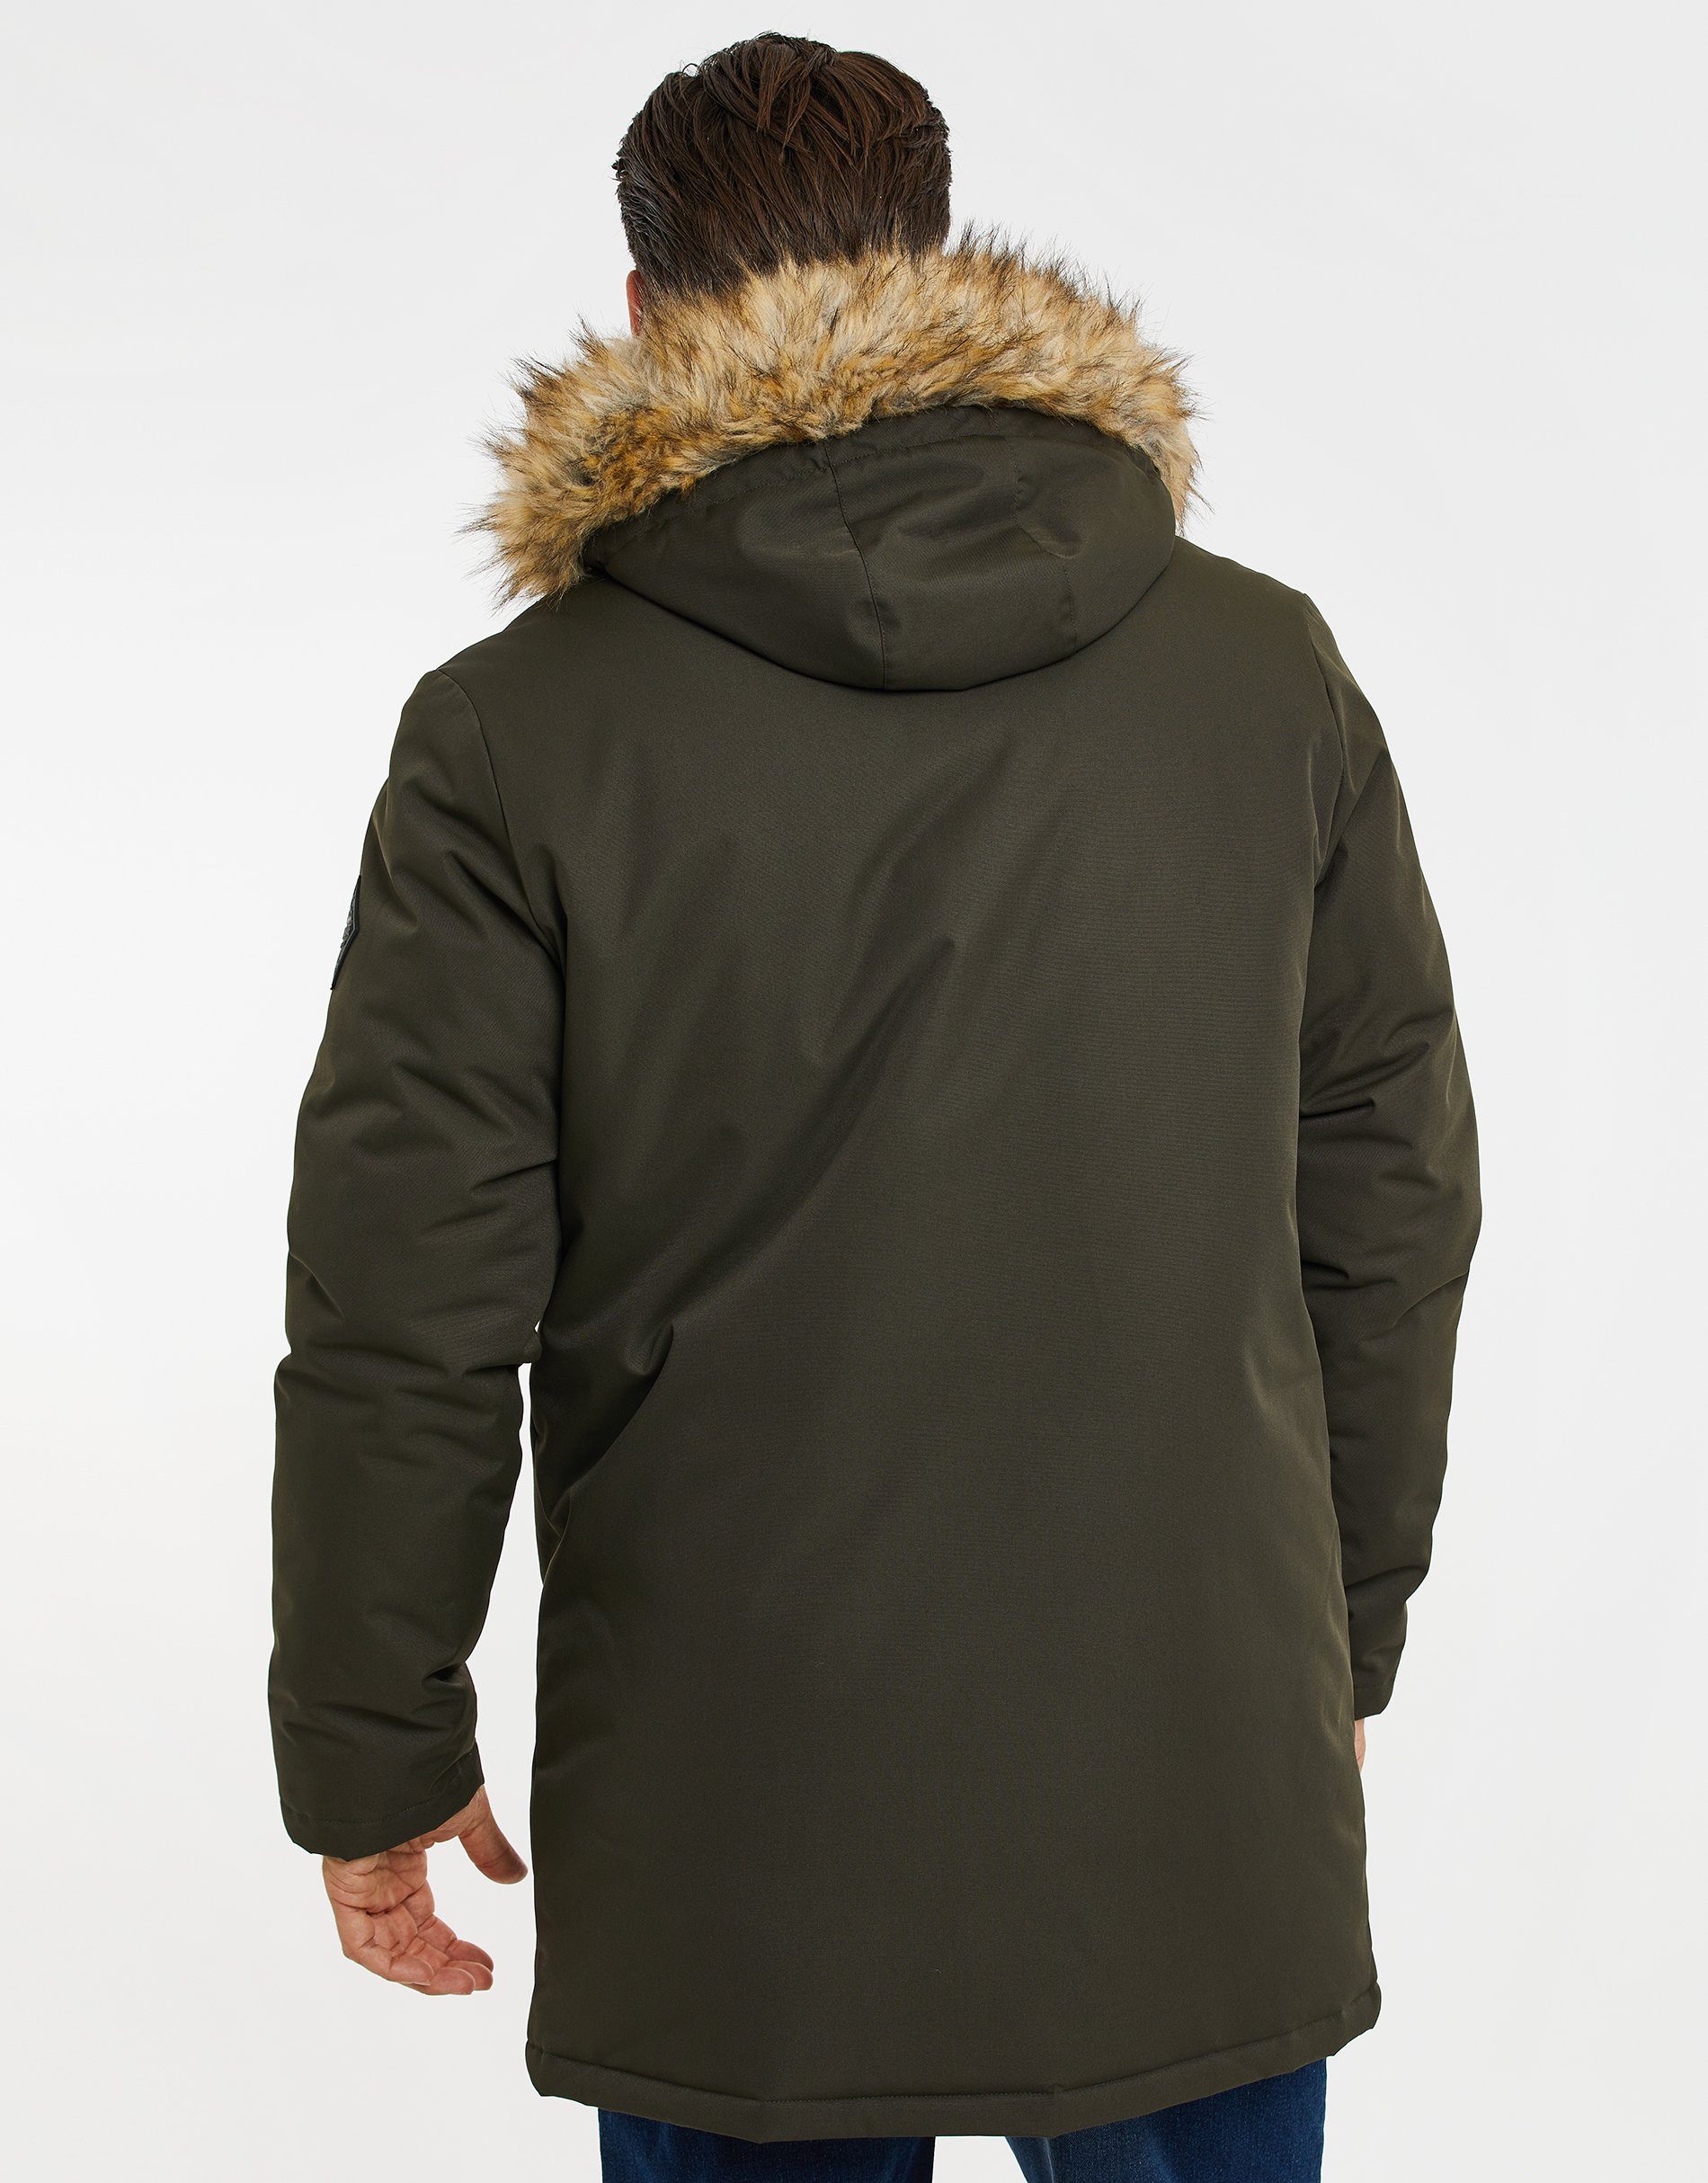 THB Recycled Threadbare Clarkston olivgrün (GRS) Jacket Khaki- zertifiziert Standard Winterjacke Global